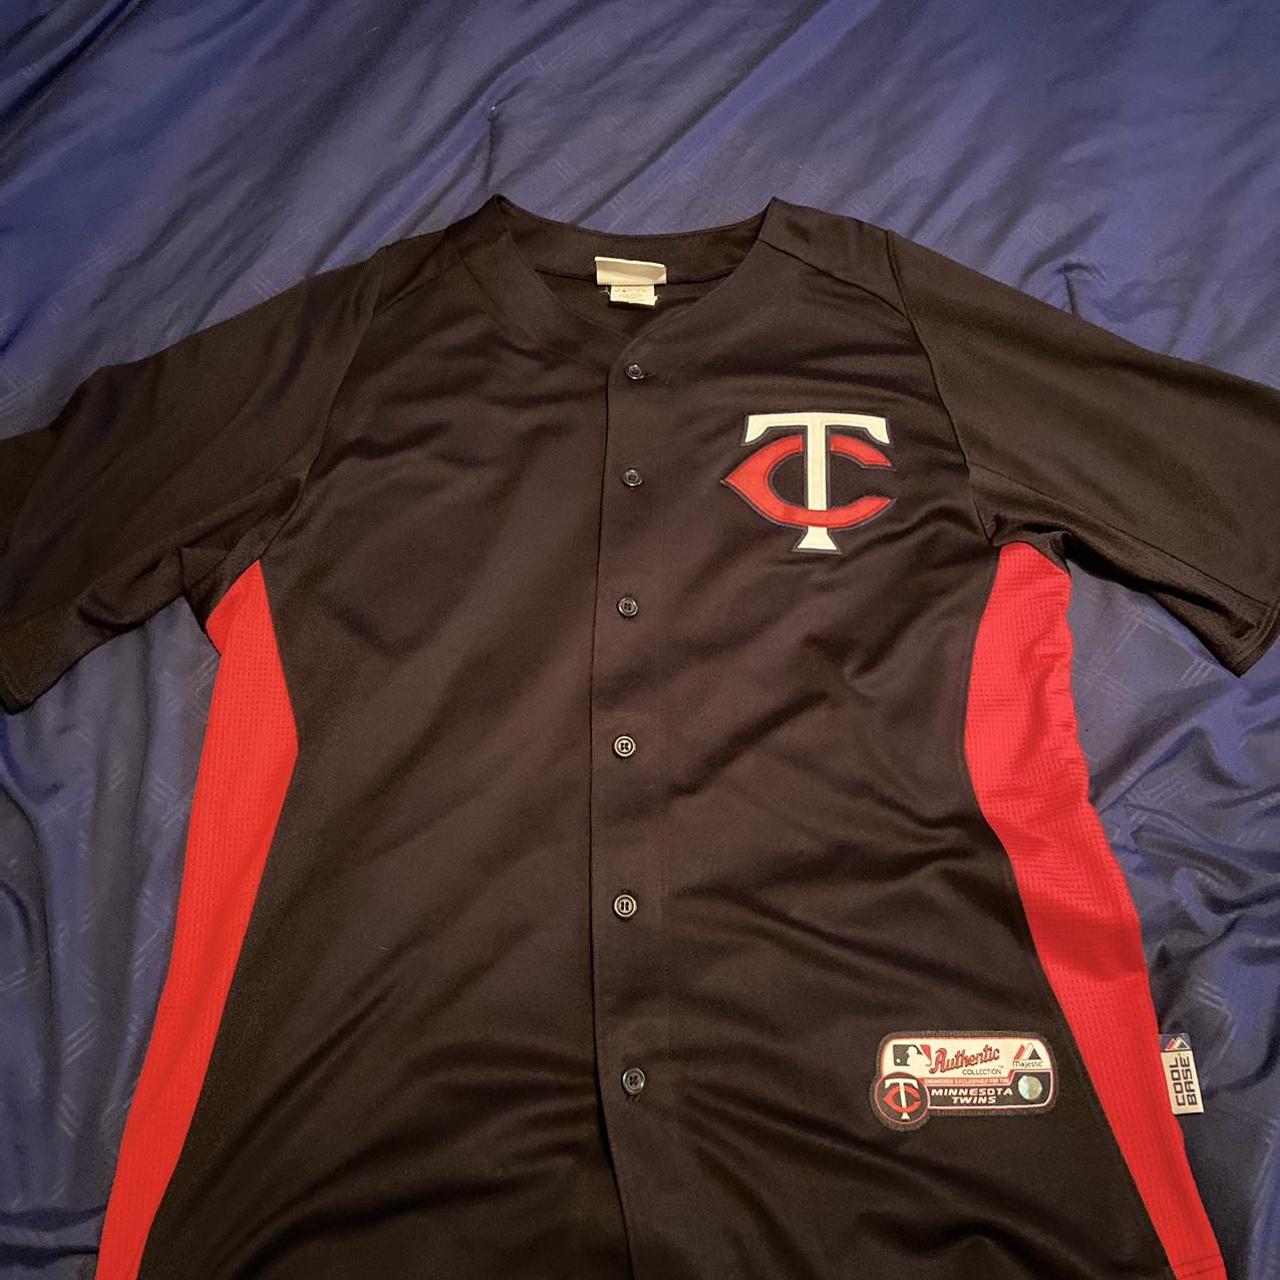 Twins baseball Jersey super dope jersey size medium - Depop